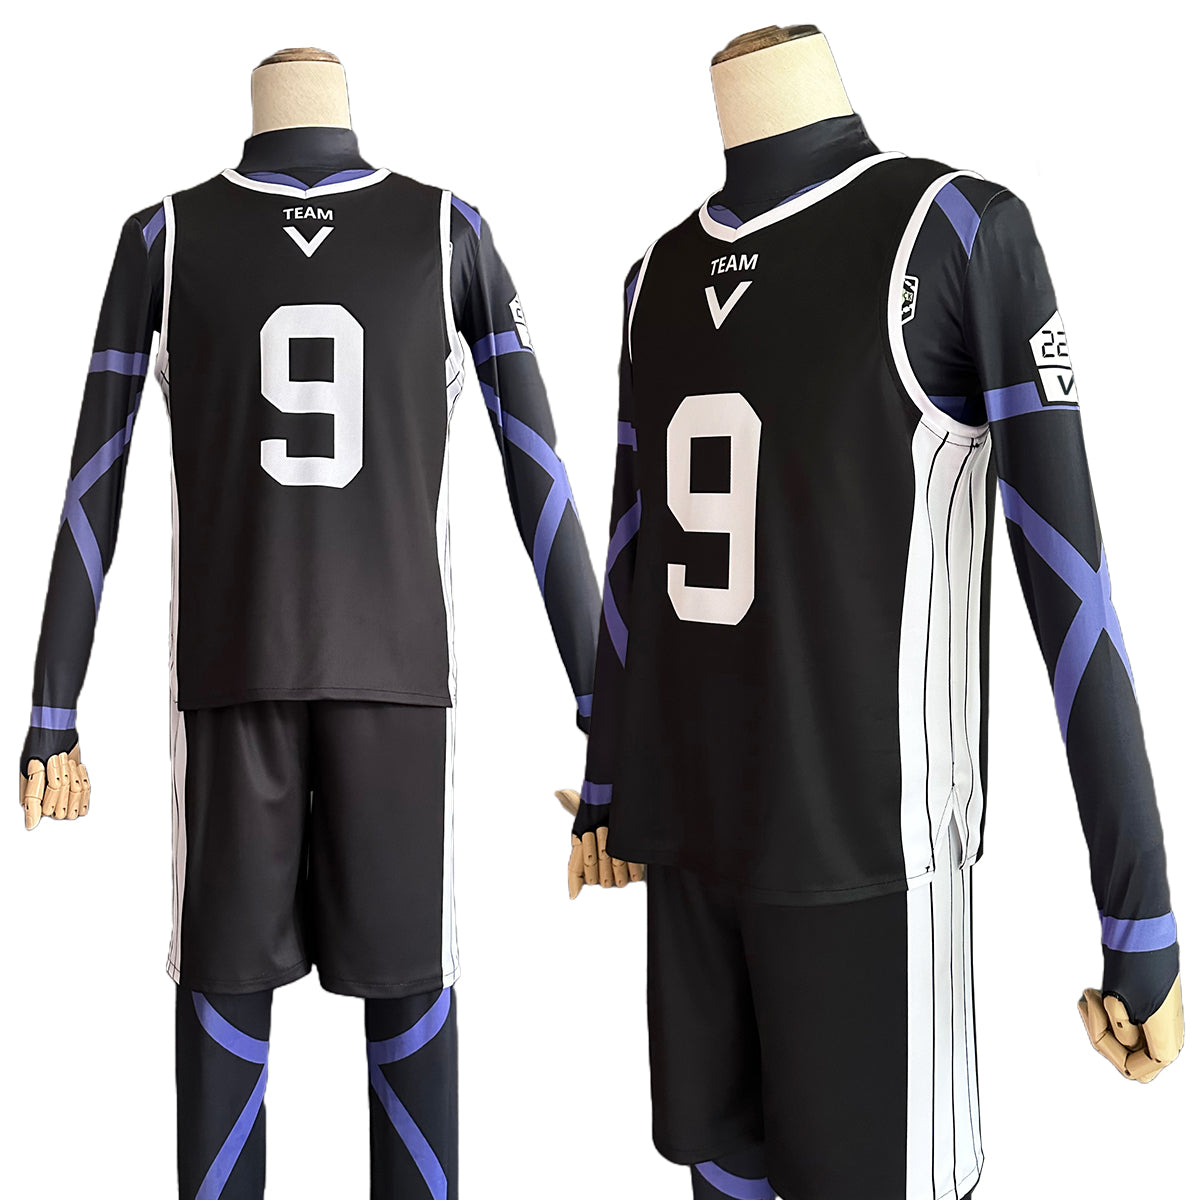 HOLOUN Blue Lock Anime Cosplay Costume No.9 Reo Black T-shirt Football Soccer Training Uniform Halloween Christmas Gift New